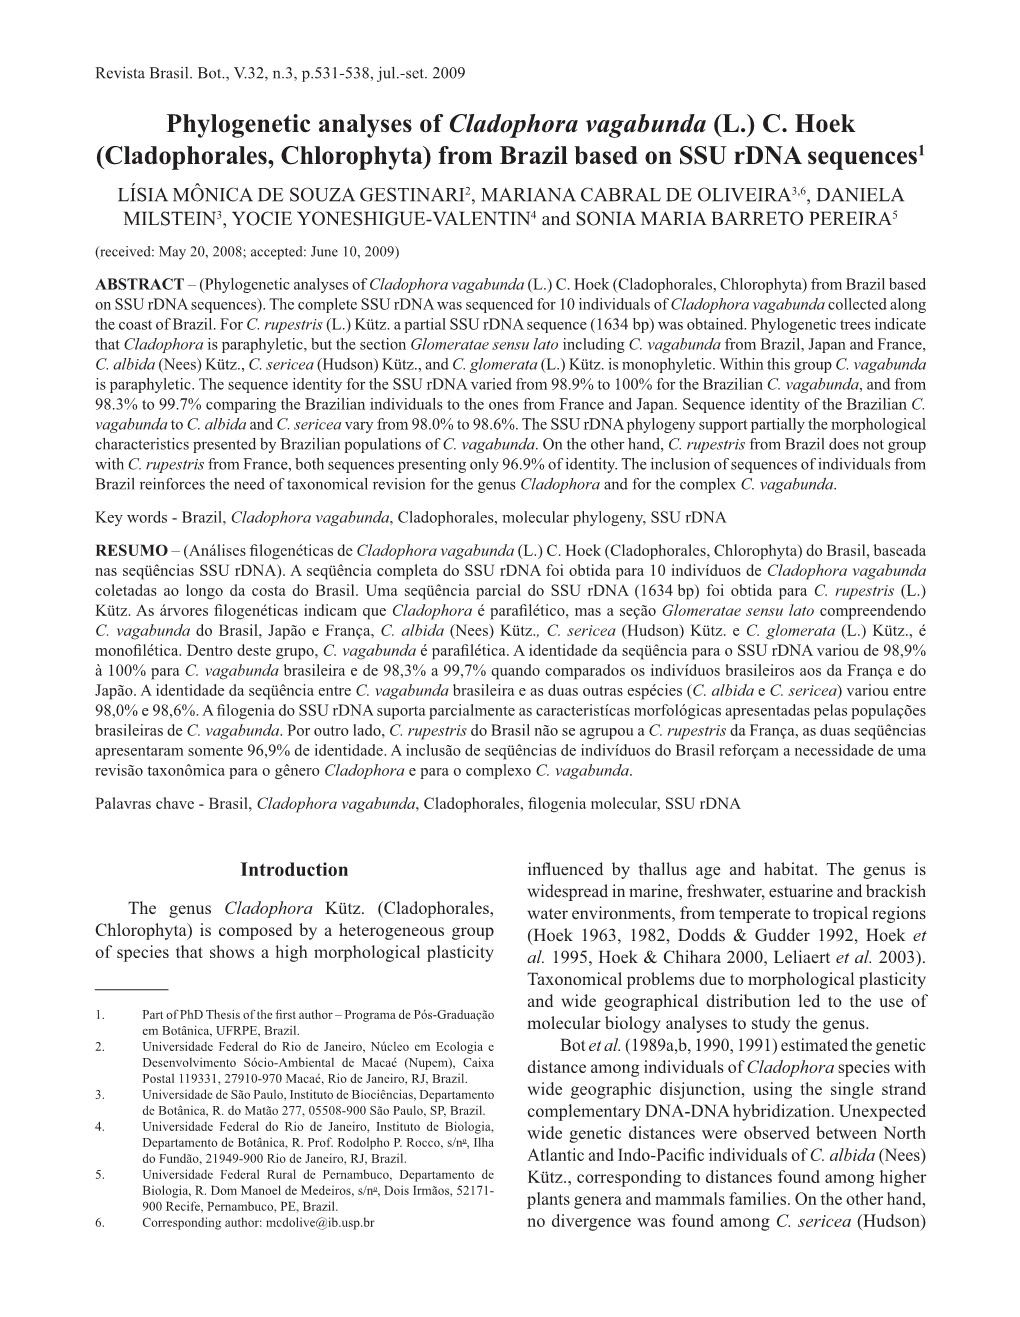 Phylogenetic Analyses of Cladophora Vagabunda (L.) C. Hoek (Cladophorales, Chlorophyta) from Brazil Based on SSU Rdna Sequences1